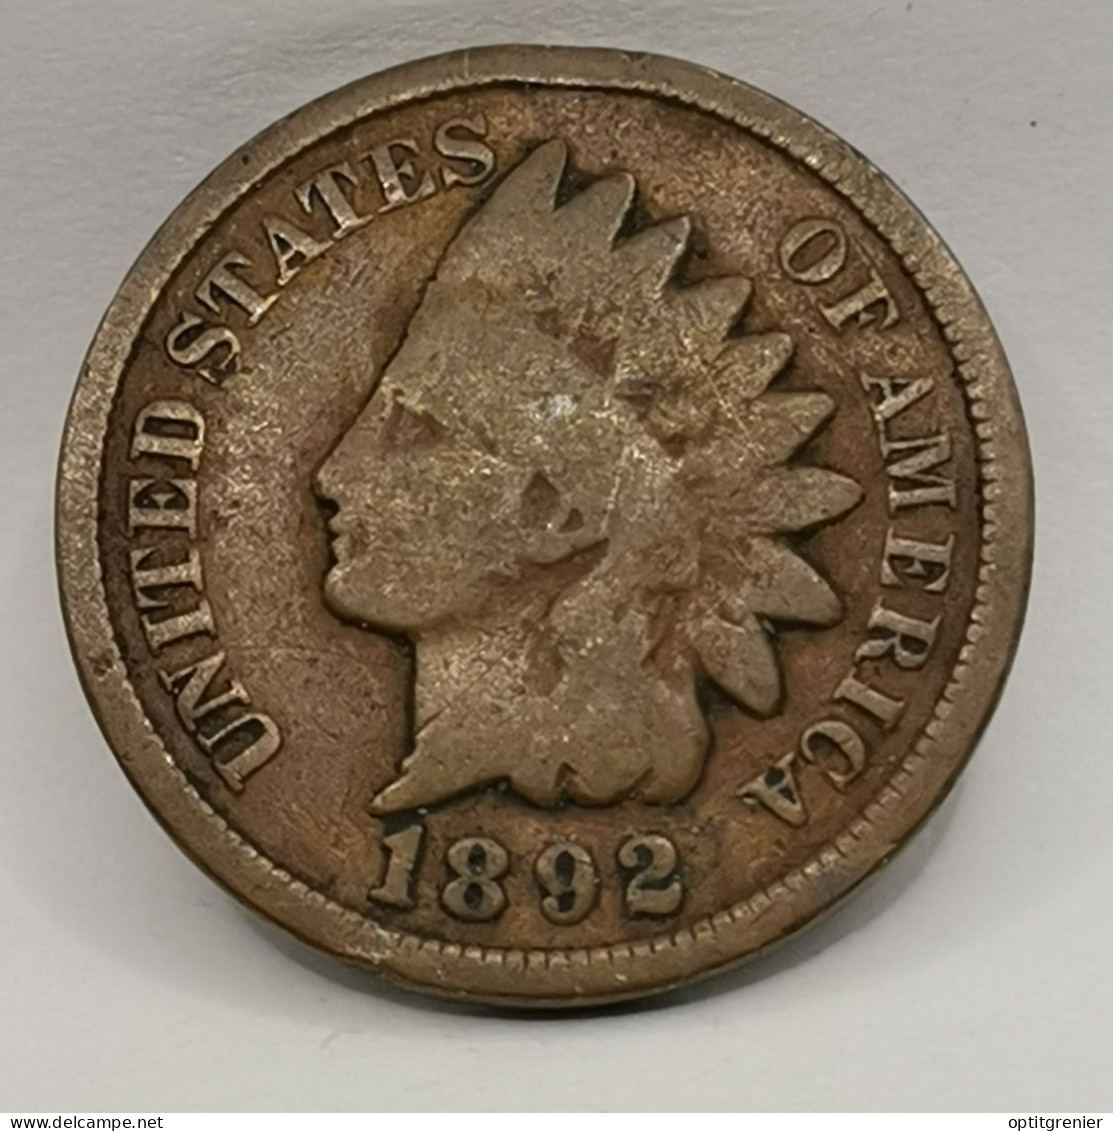 1 CENT INDIAN HEAD 1892 USA / TETE D'INDIEN - 1859-1909: Indian Head